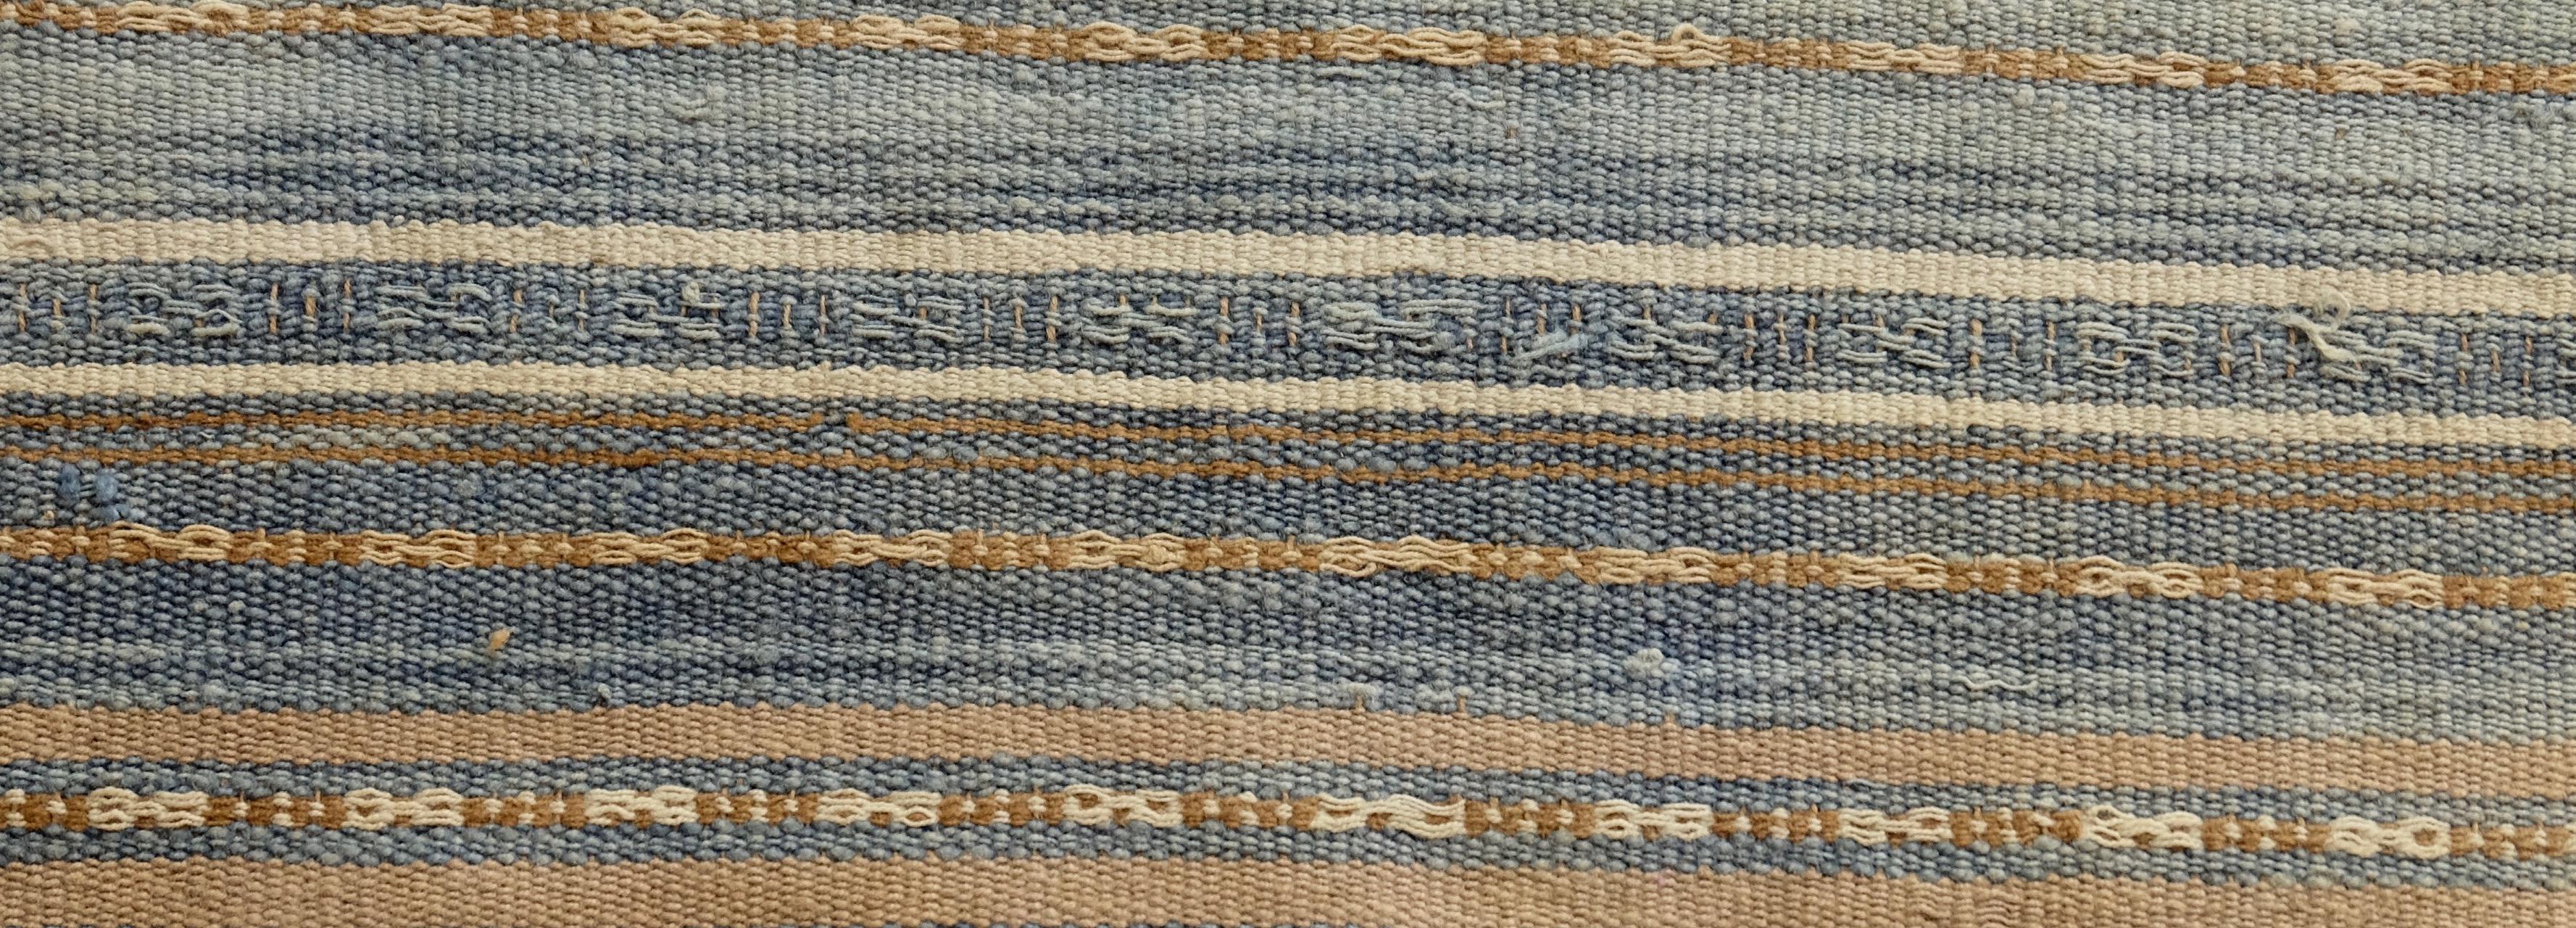 Peruvian Striped Inca Pre-Columbian Textile, Peru, circa 1400-1532 AD, Ex Ferdinand Anton